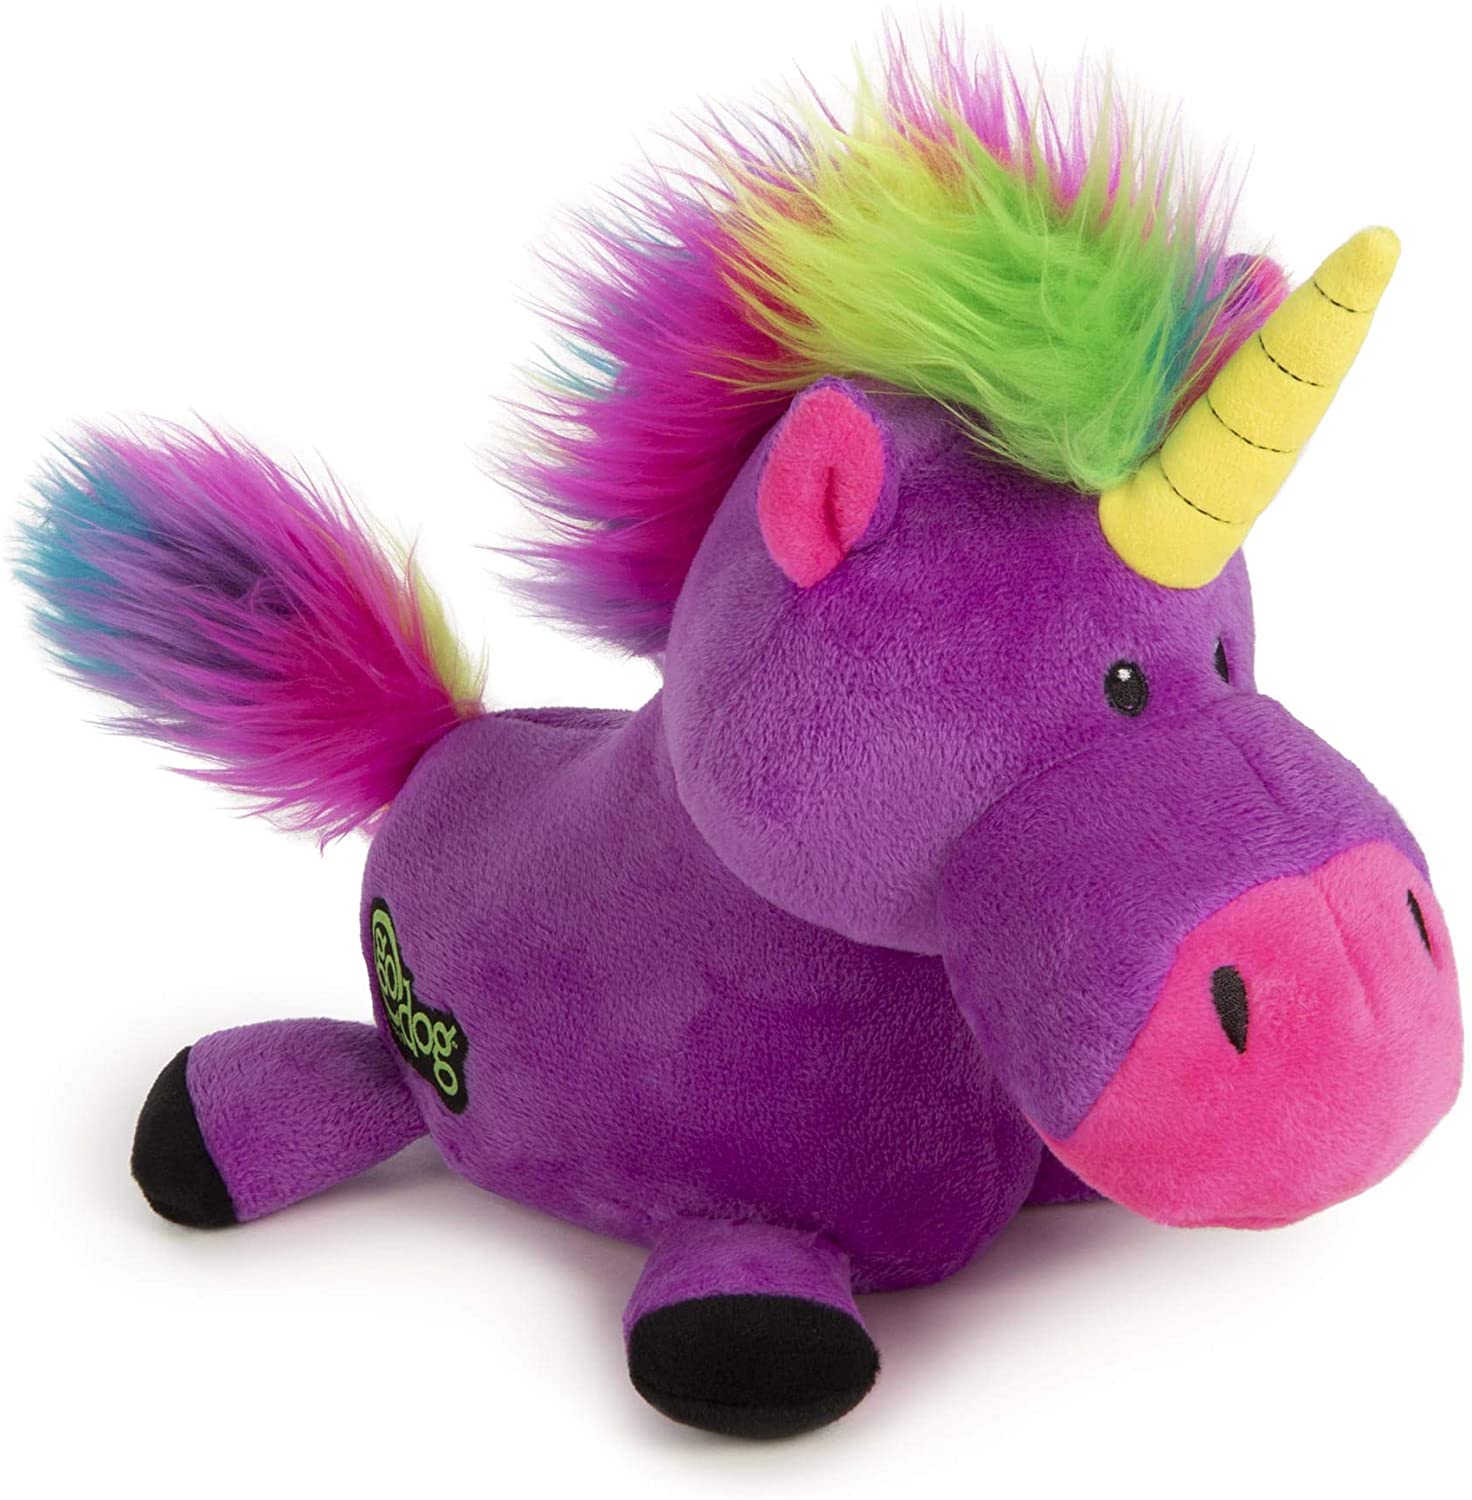 goDog® Unicorns with Chew Guard Technology™ Durable Plush Dog Toy with Squeaker, Purple, Large